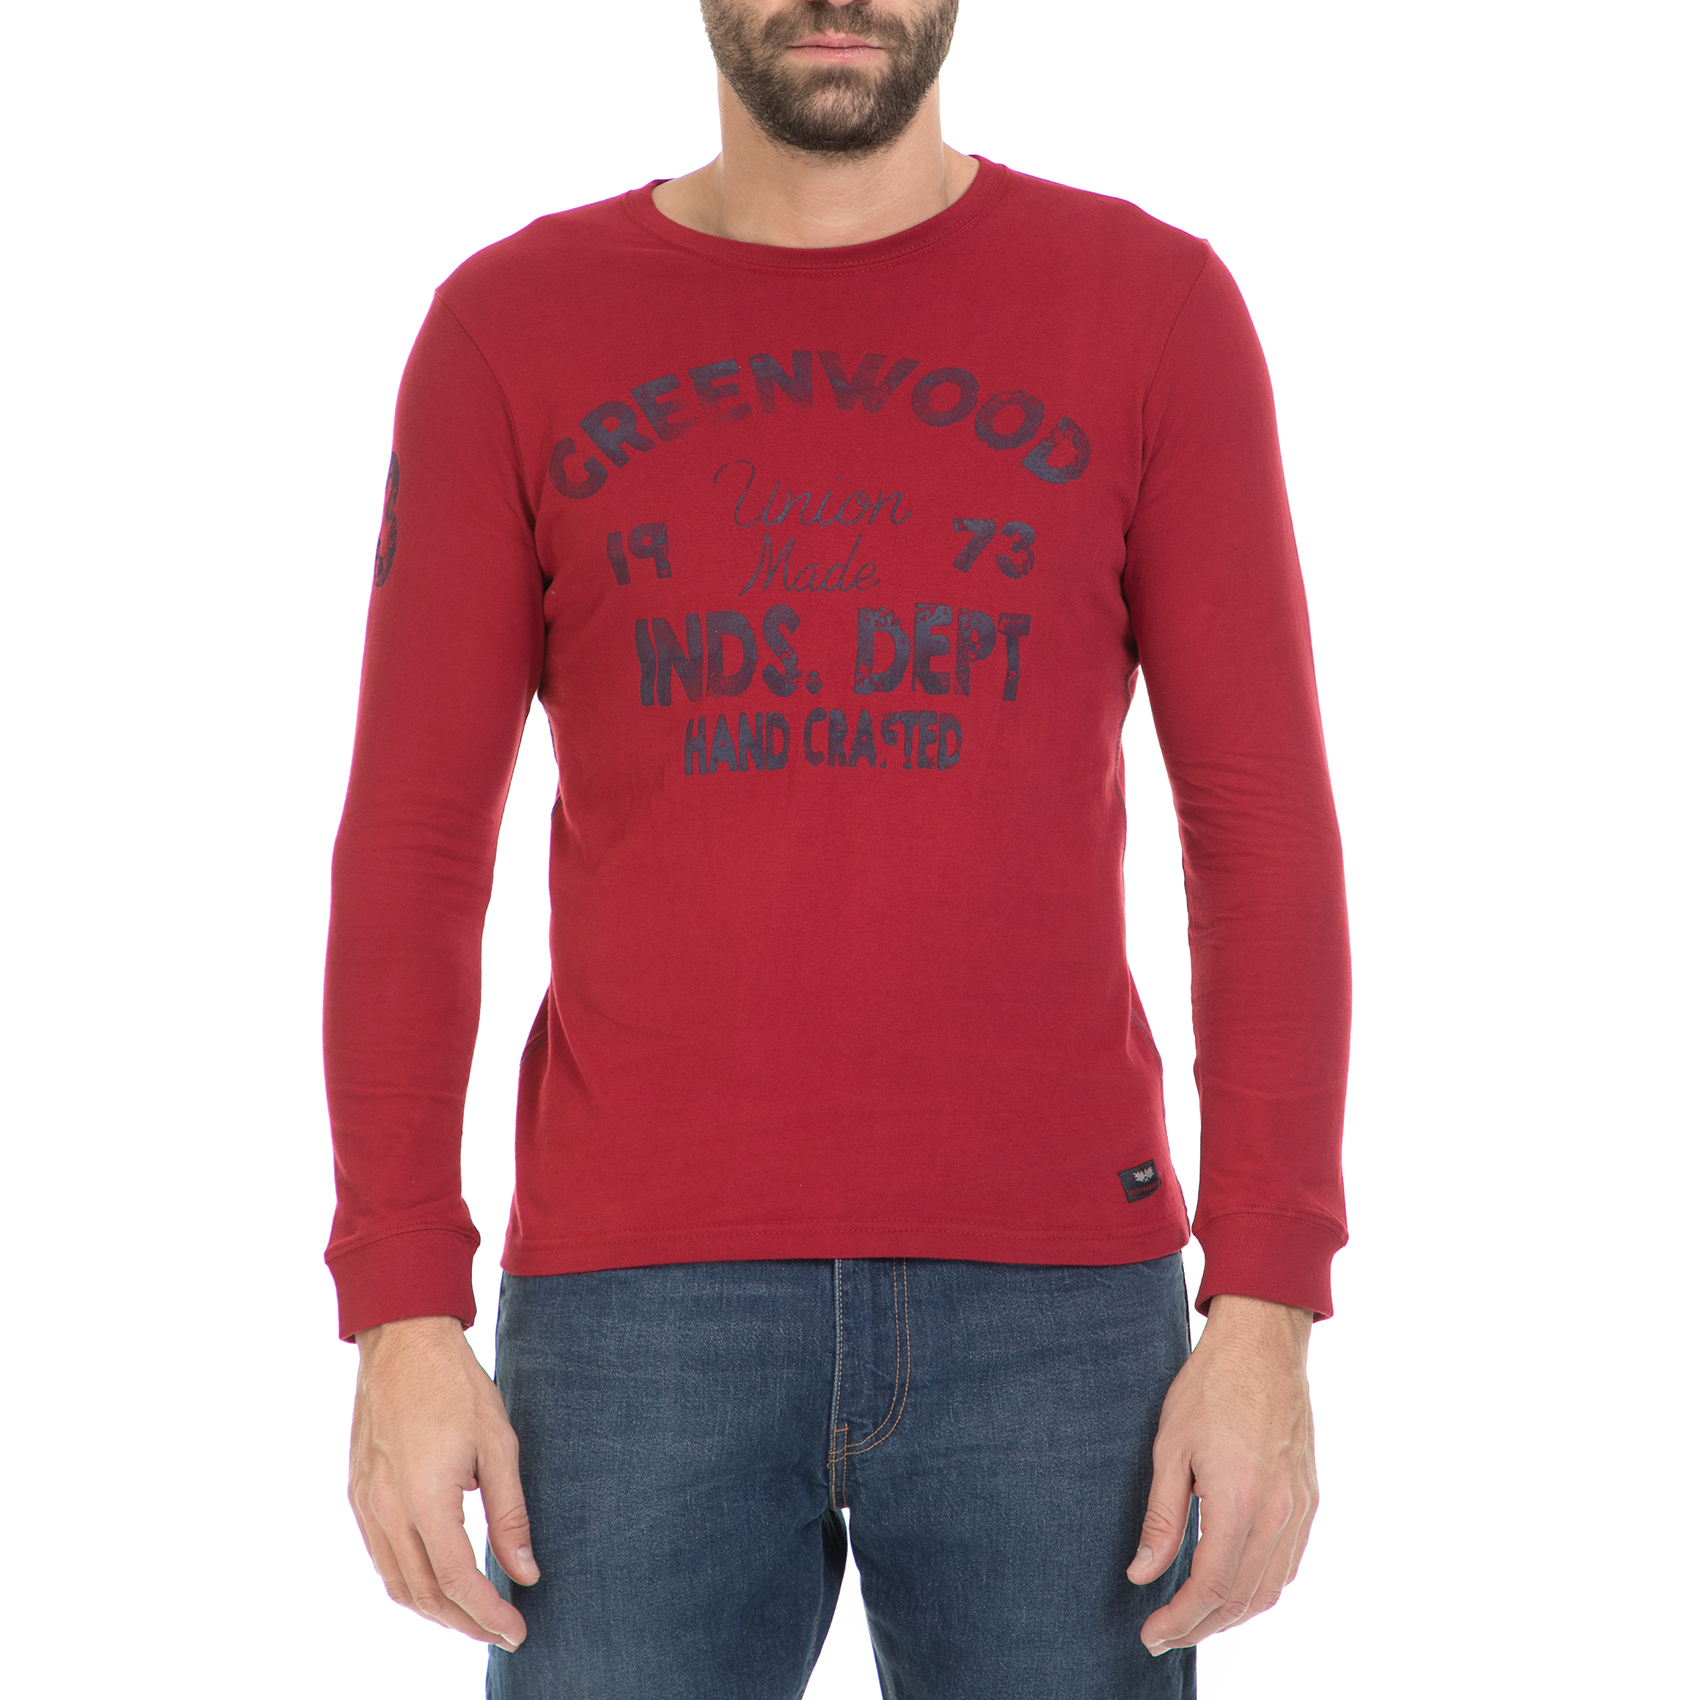 GREENWOOD - Ανδρική μπλούζα GREENWOOD κόκκινη Ανδρικά/Ρούχα/Μπλούζες/Μακρυμάνικες